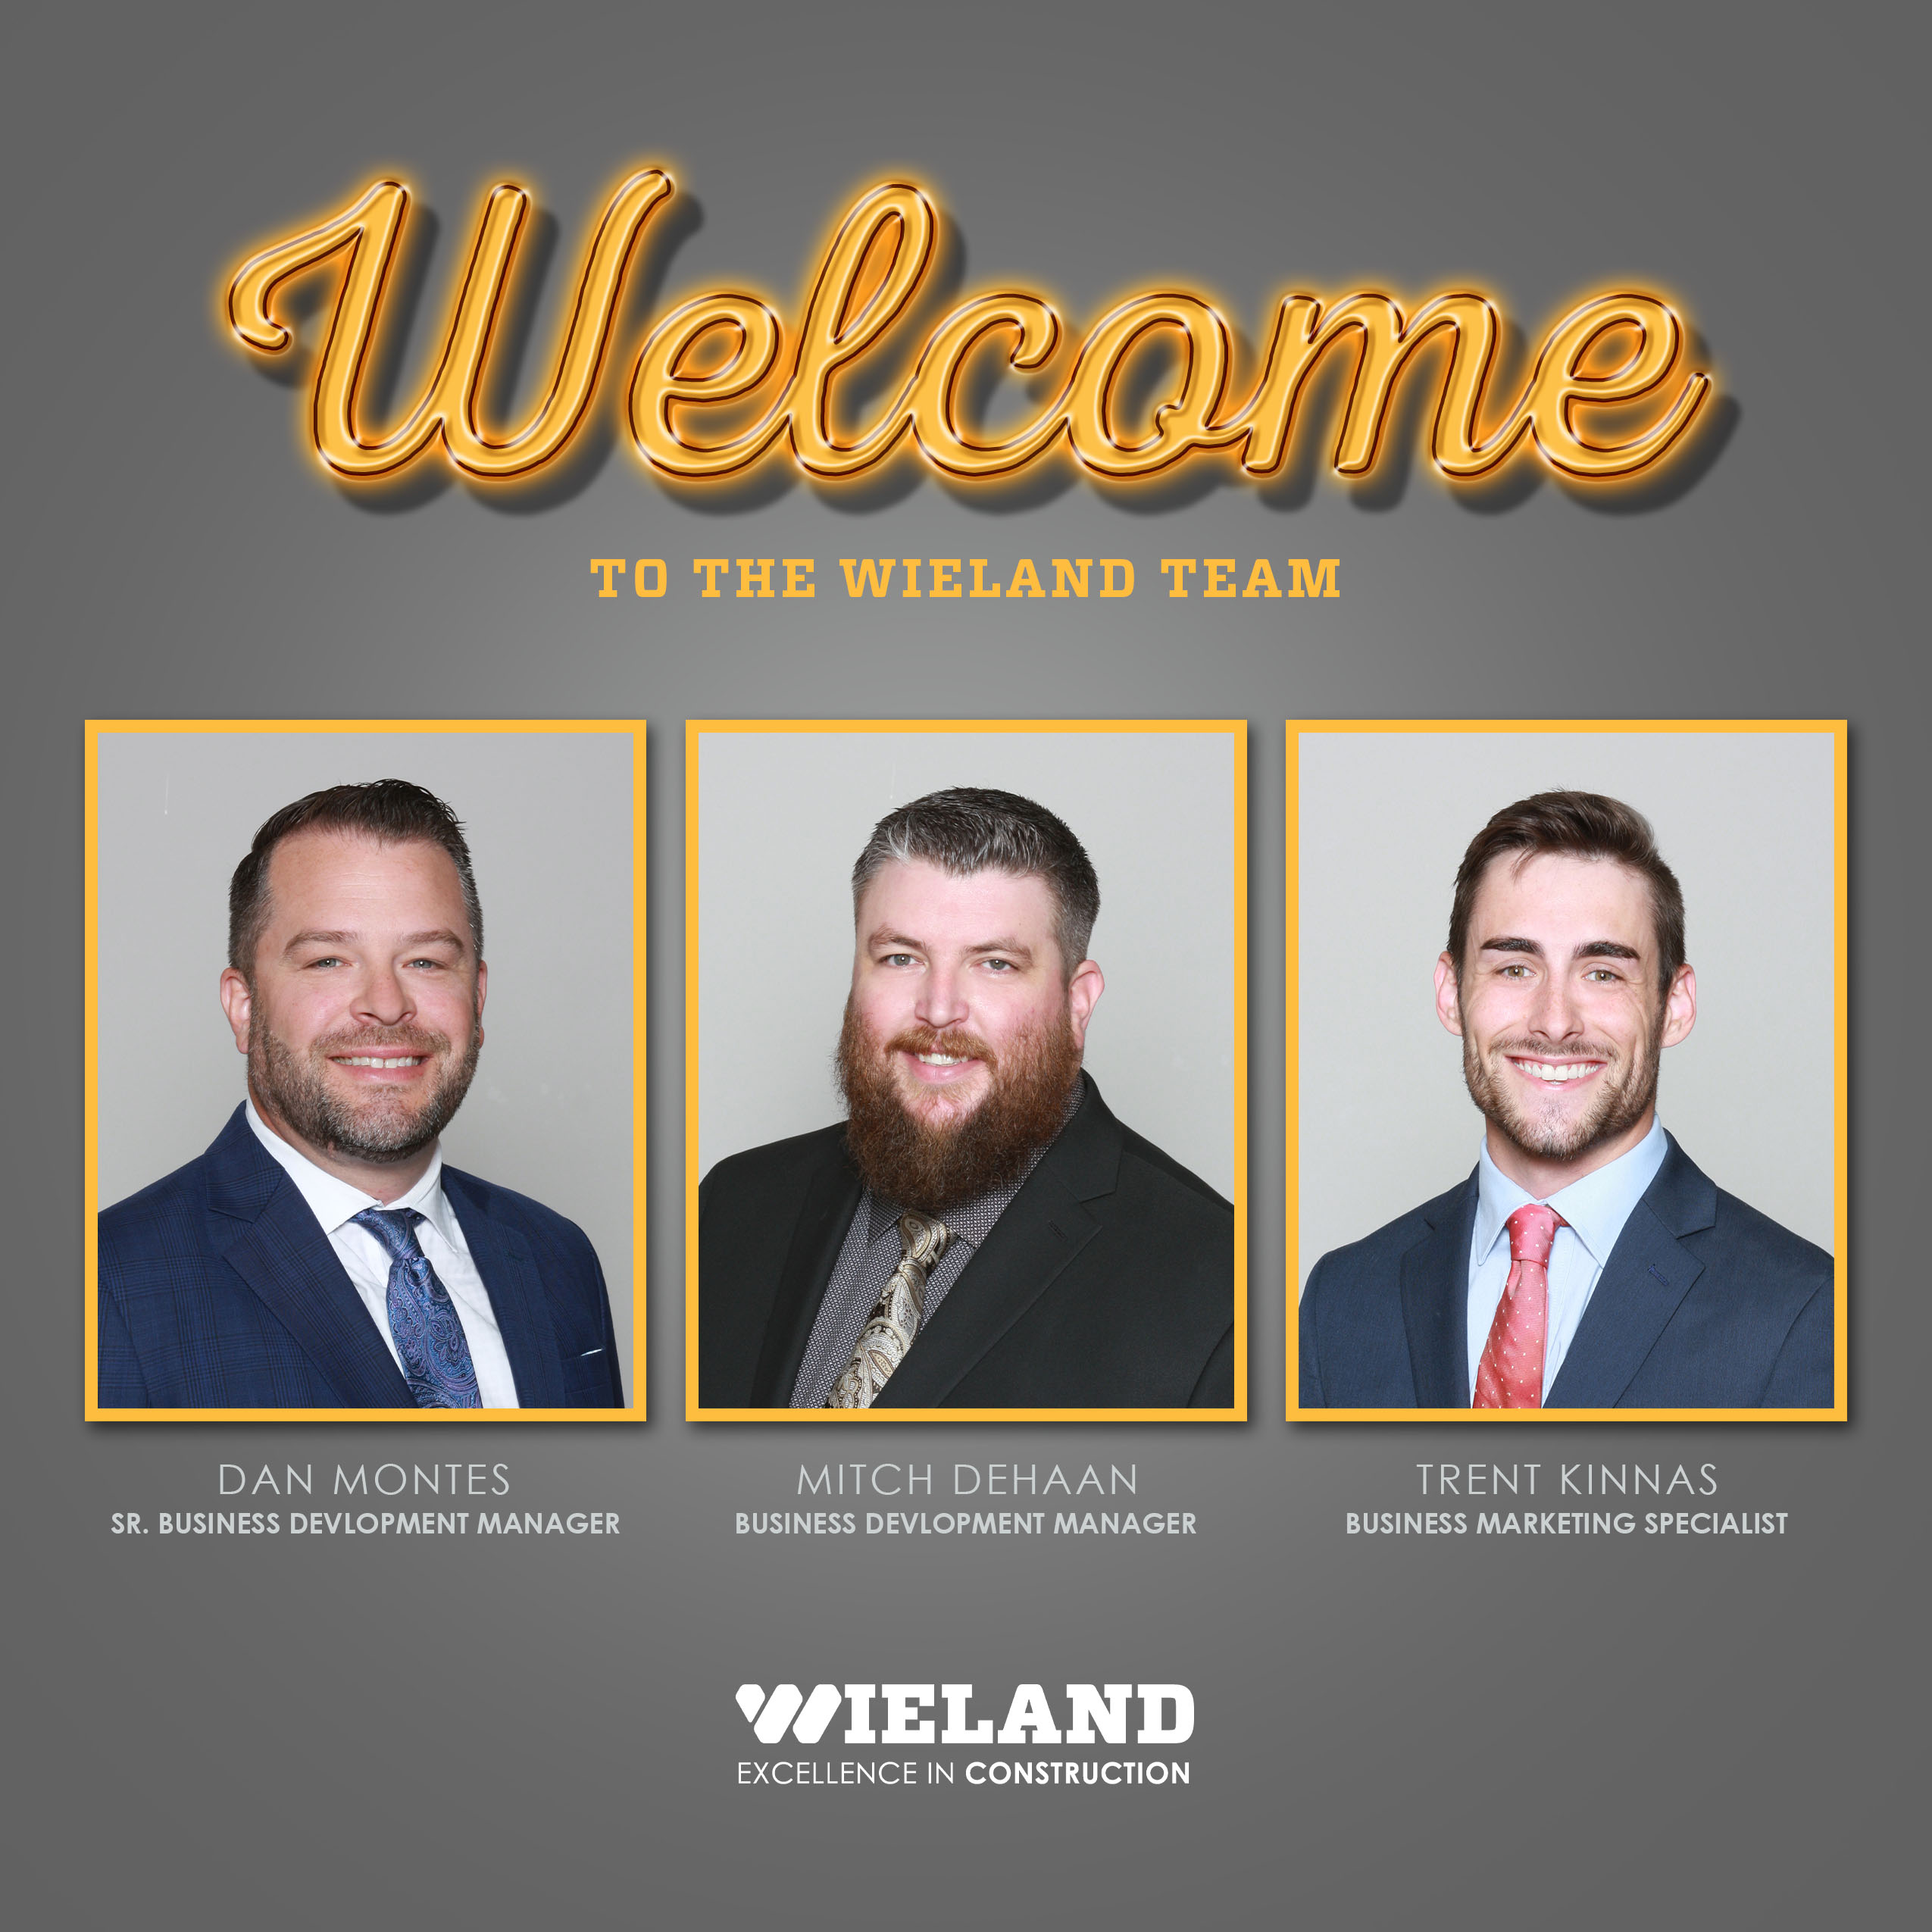 WIELAND's three new hires